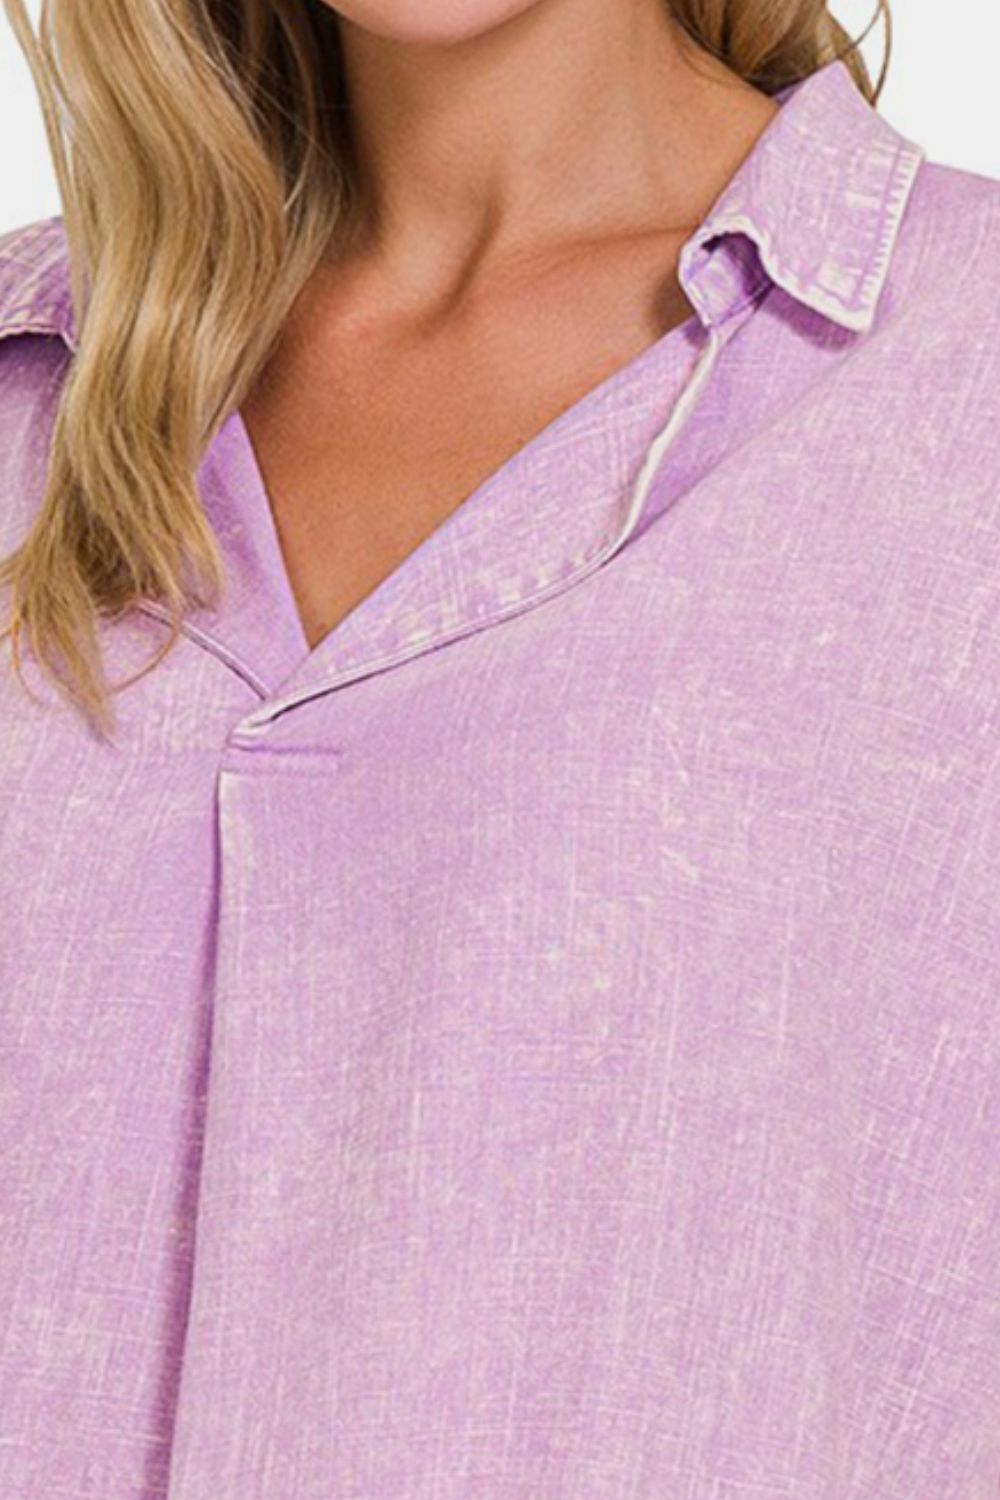 Lavender Dreams Linen V-Neck Shirt